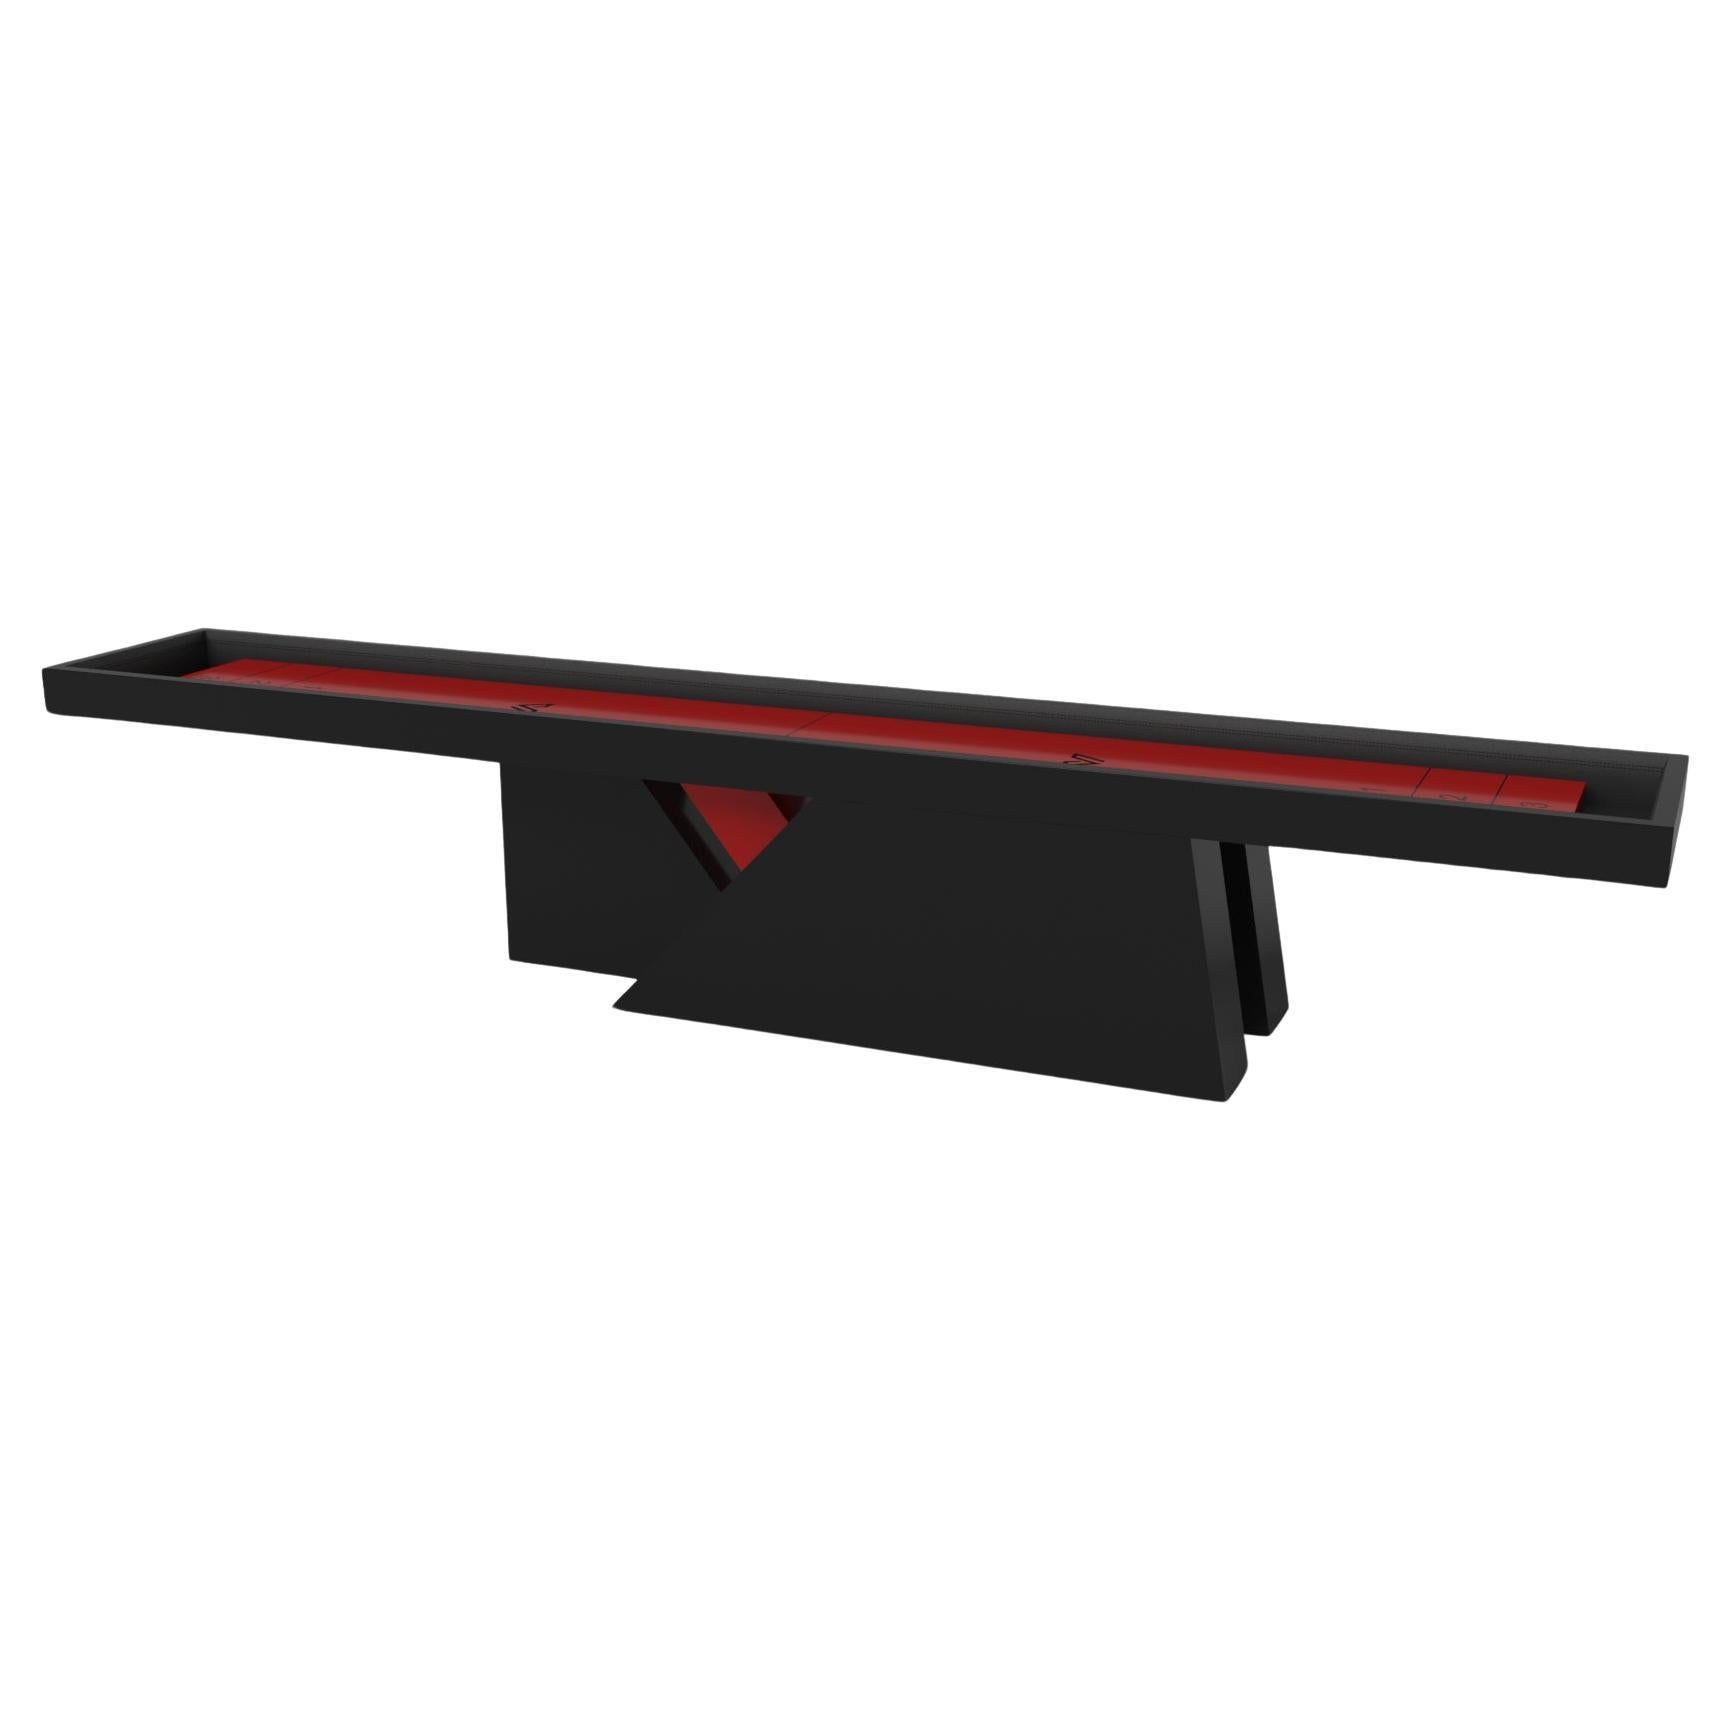 Elevate Customs Stilt Shuffleboard Tables /Solid Pantone Black Color in 12' -USA